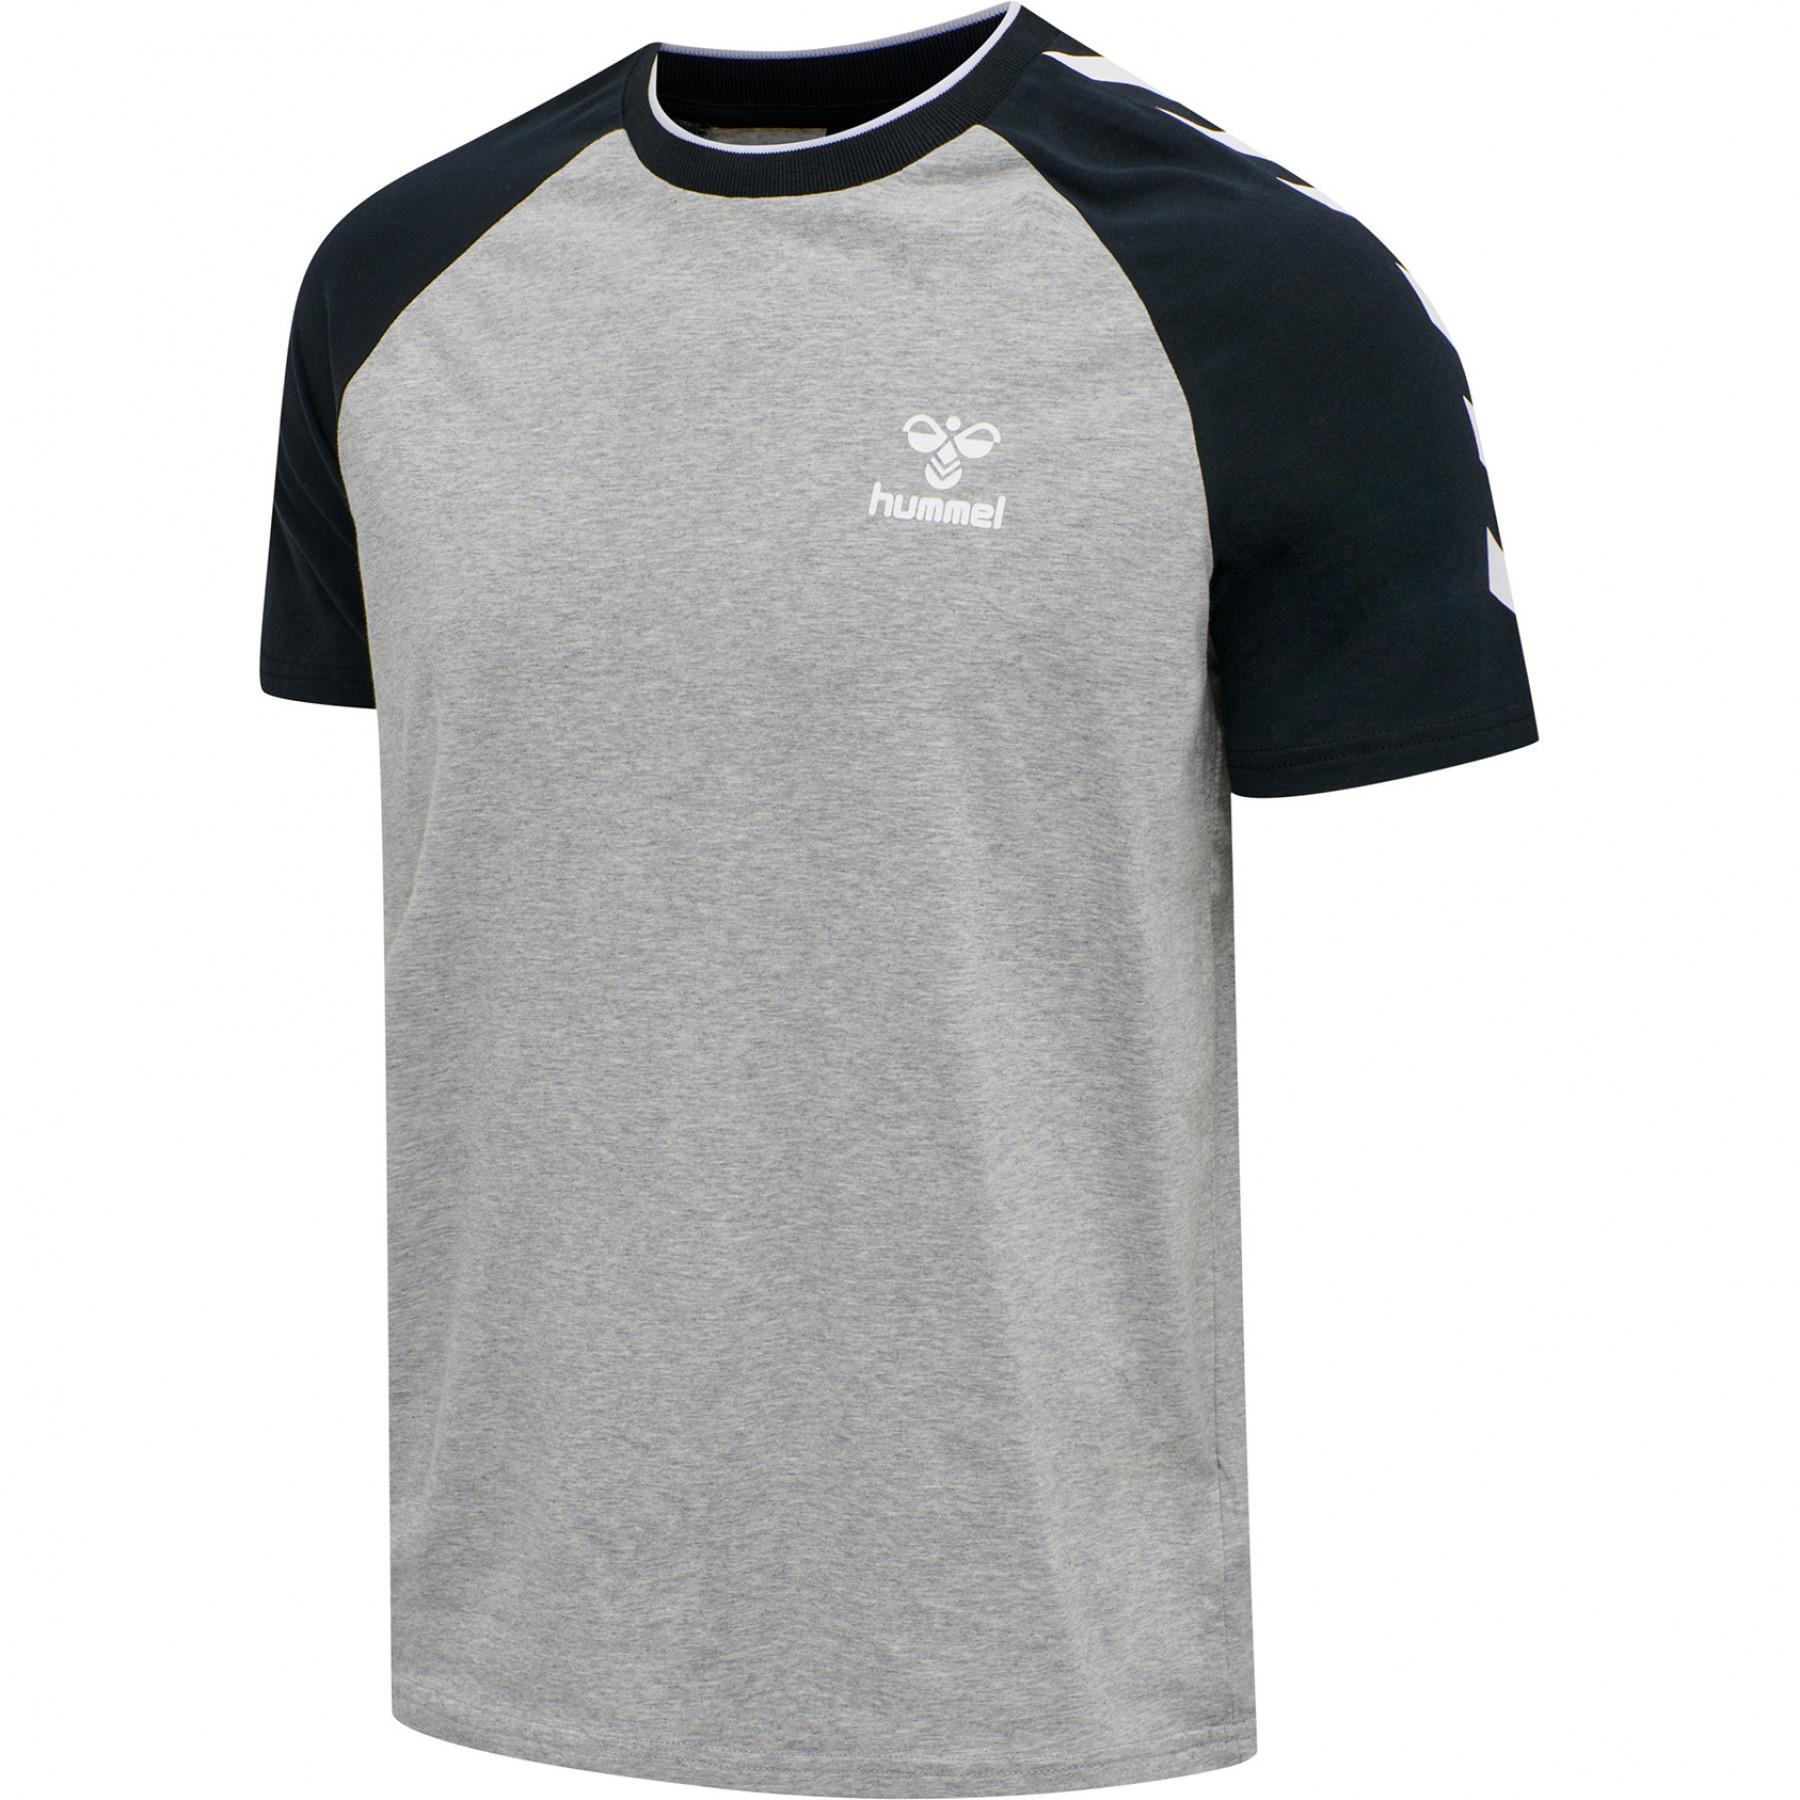 Handball Textile and T-shirt T-shirts hmlmark - wear - - Hummel polos